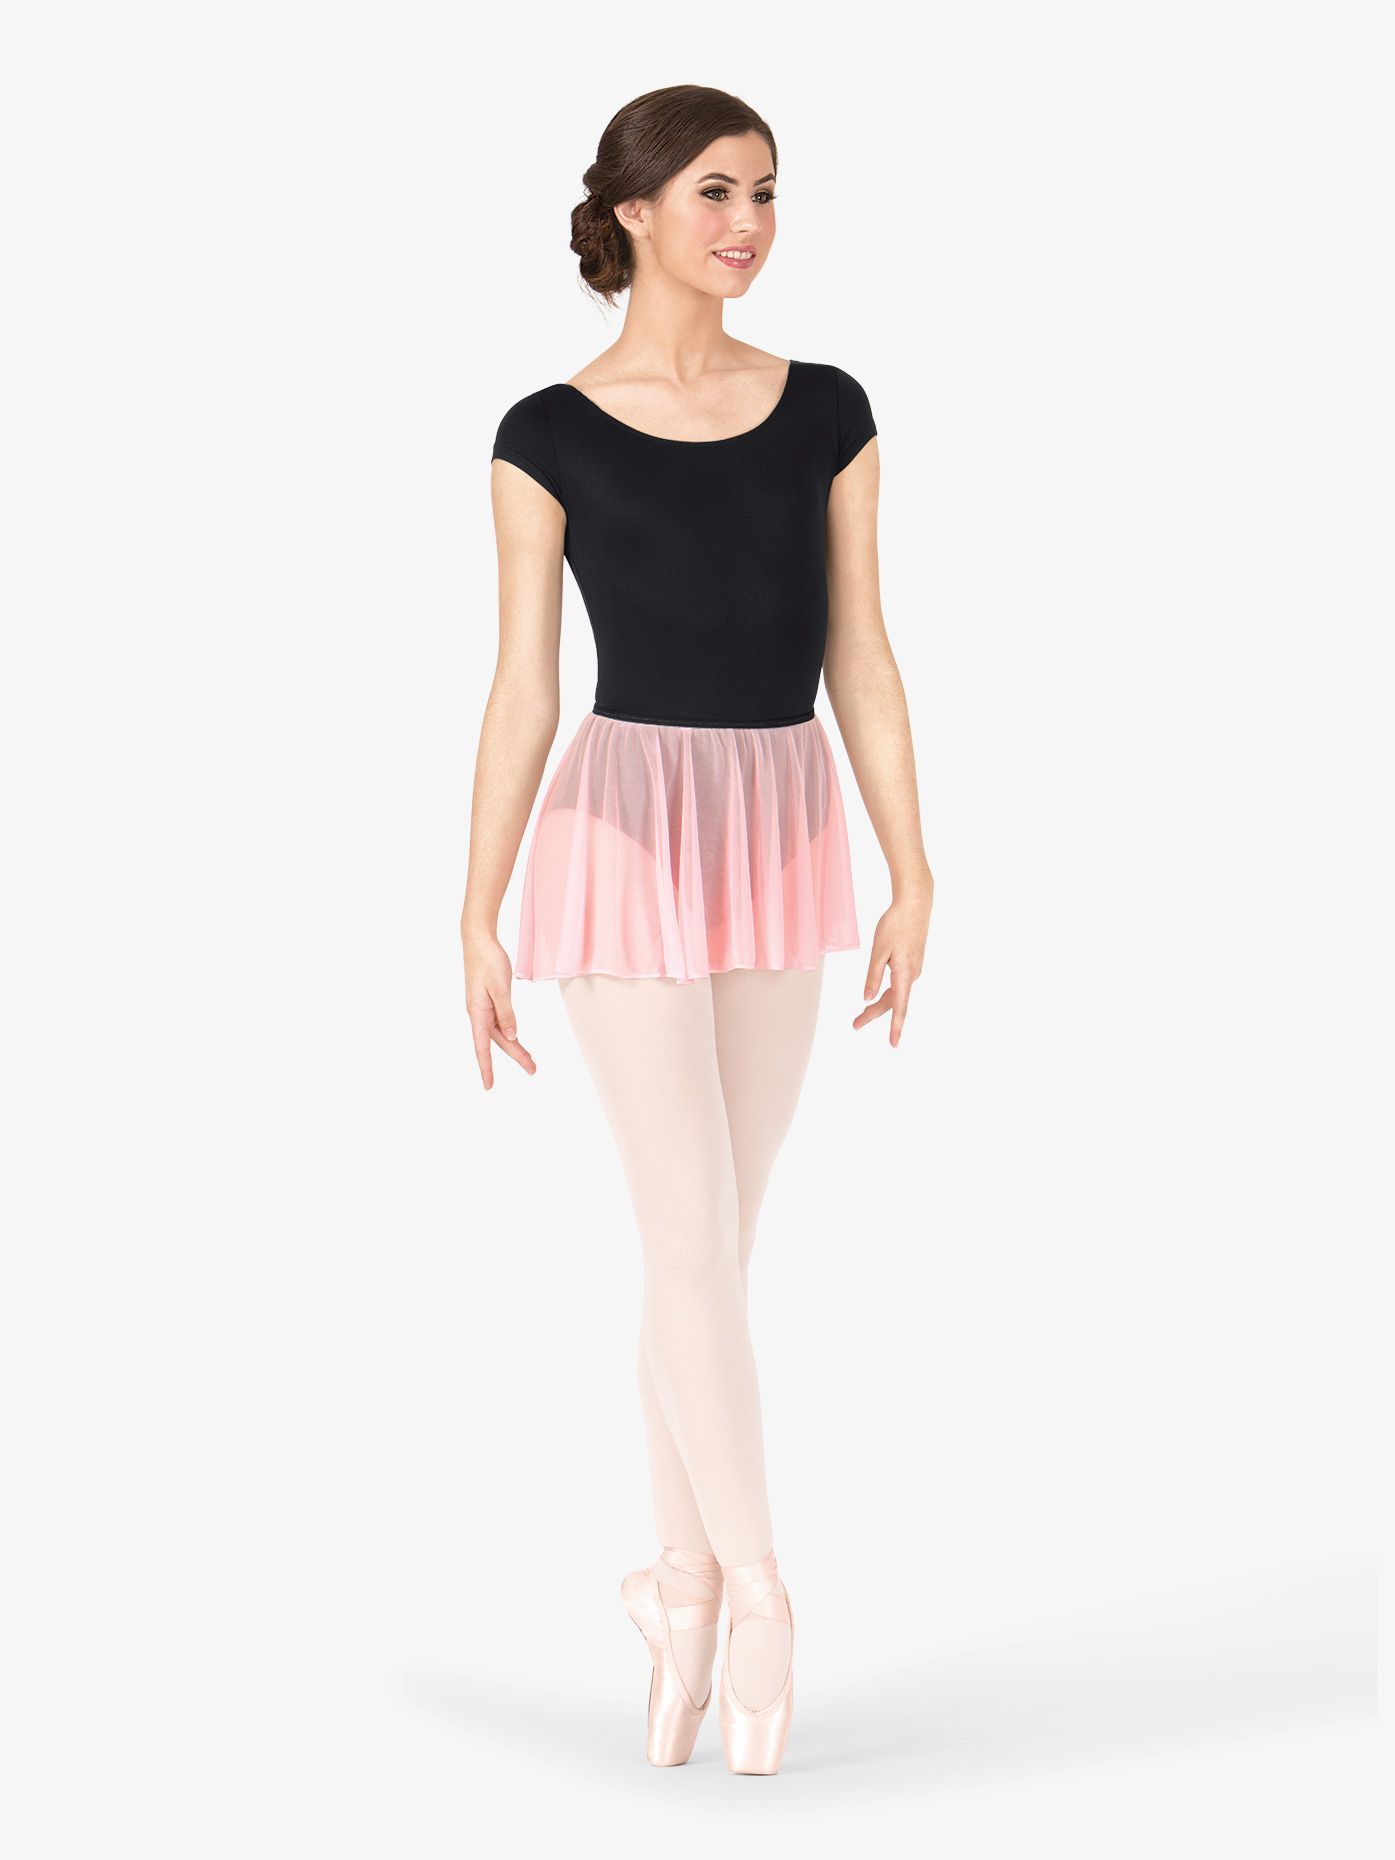 15 ballet fitness Clothes ideas